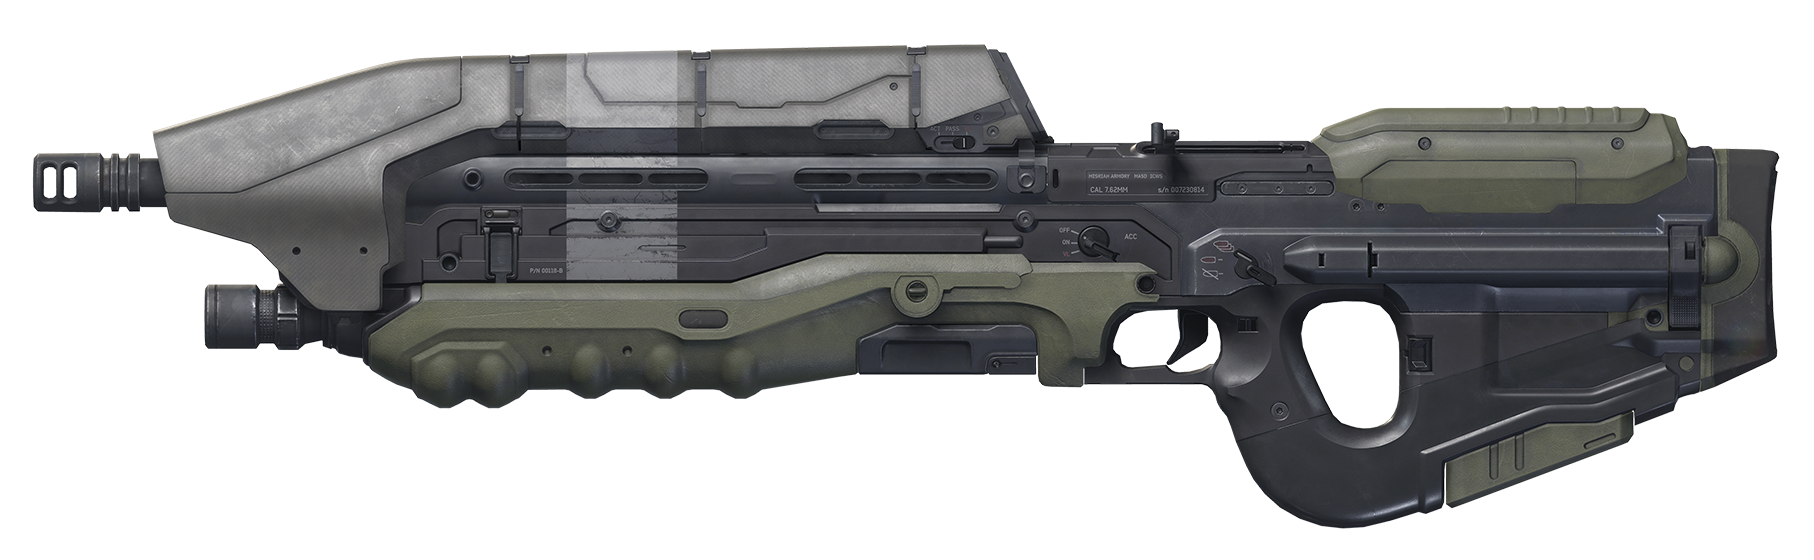 Mcfarlane Halo Reach 2 3 4 magnum smg assault rifle gun dmr battle weapon MAGNUM 